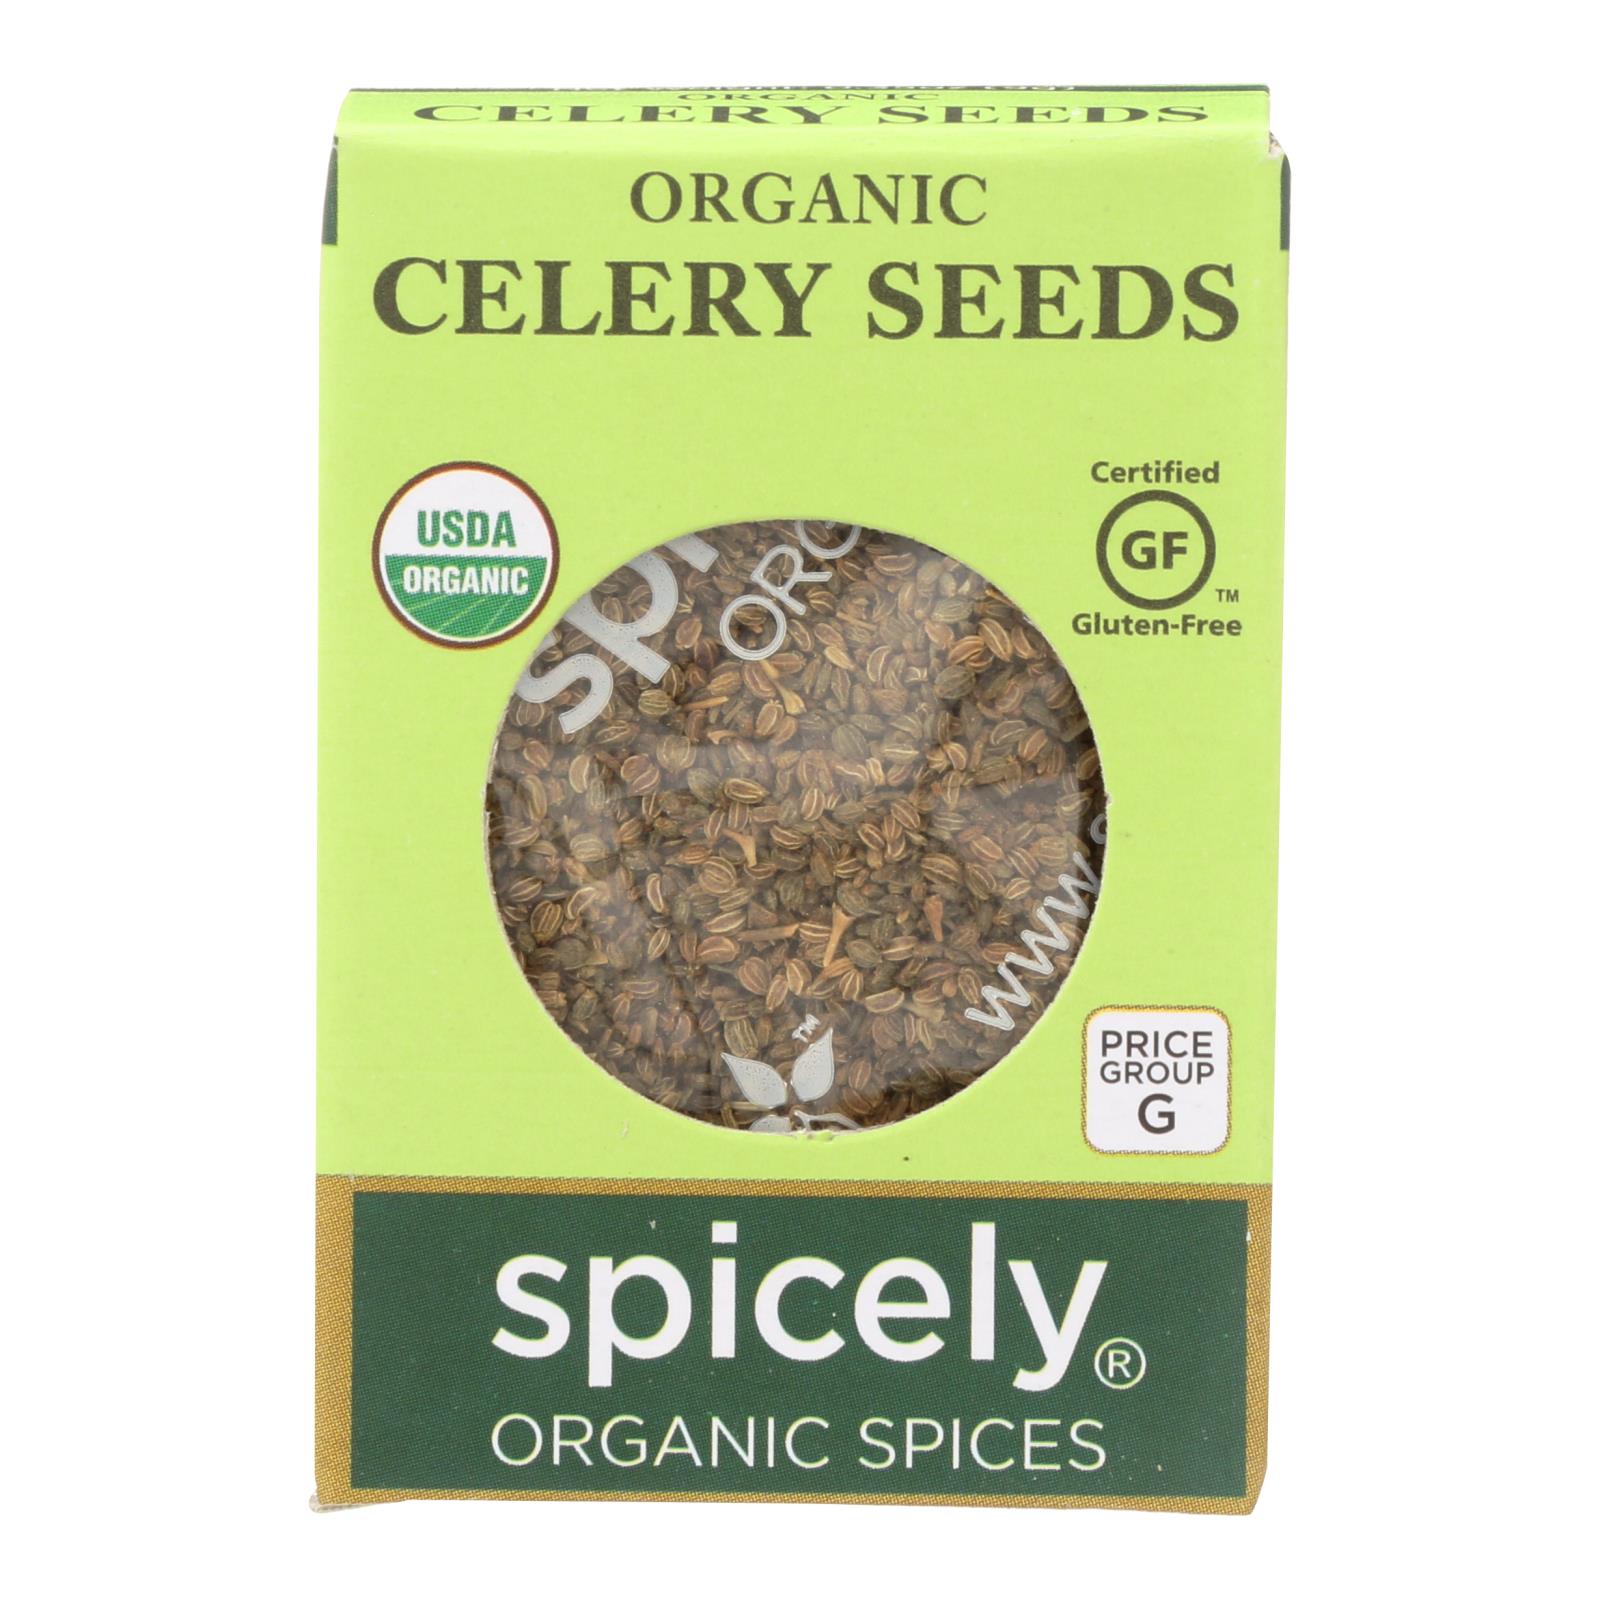 Spicely Organics - Organic Celery Seeds - 6개 묶음상품 - 0.35 oz.